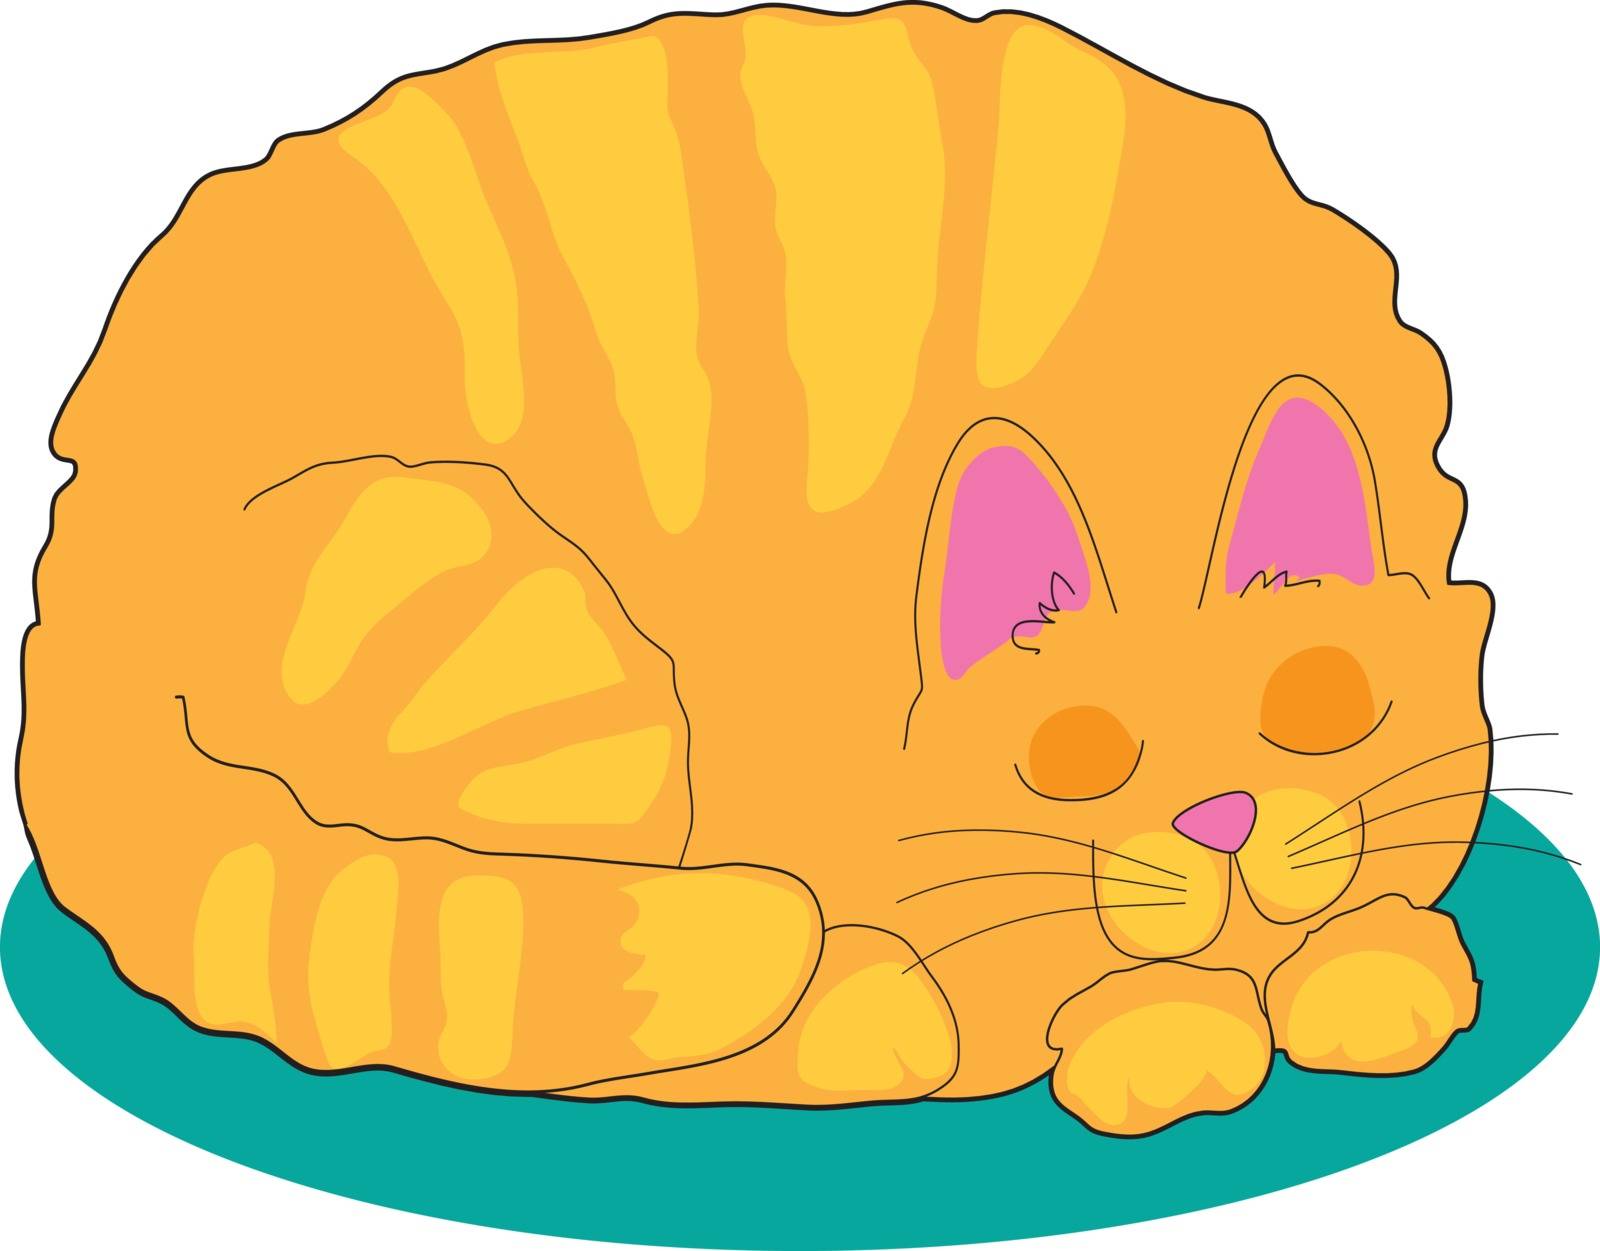 A marmalade cat sleeping on a rug